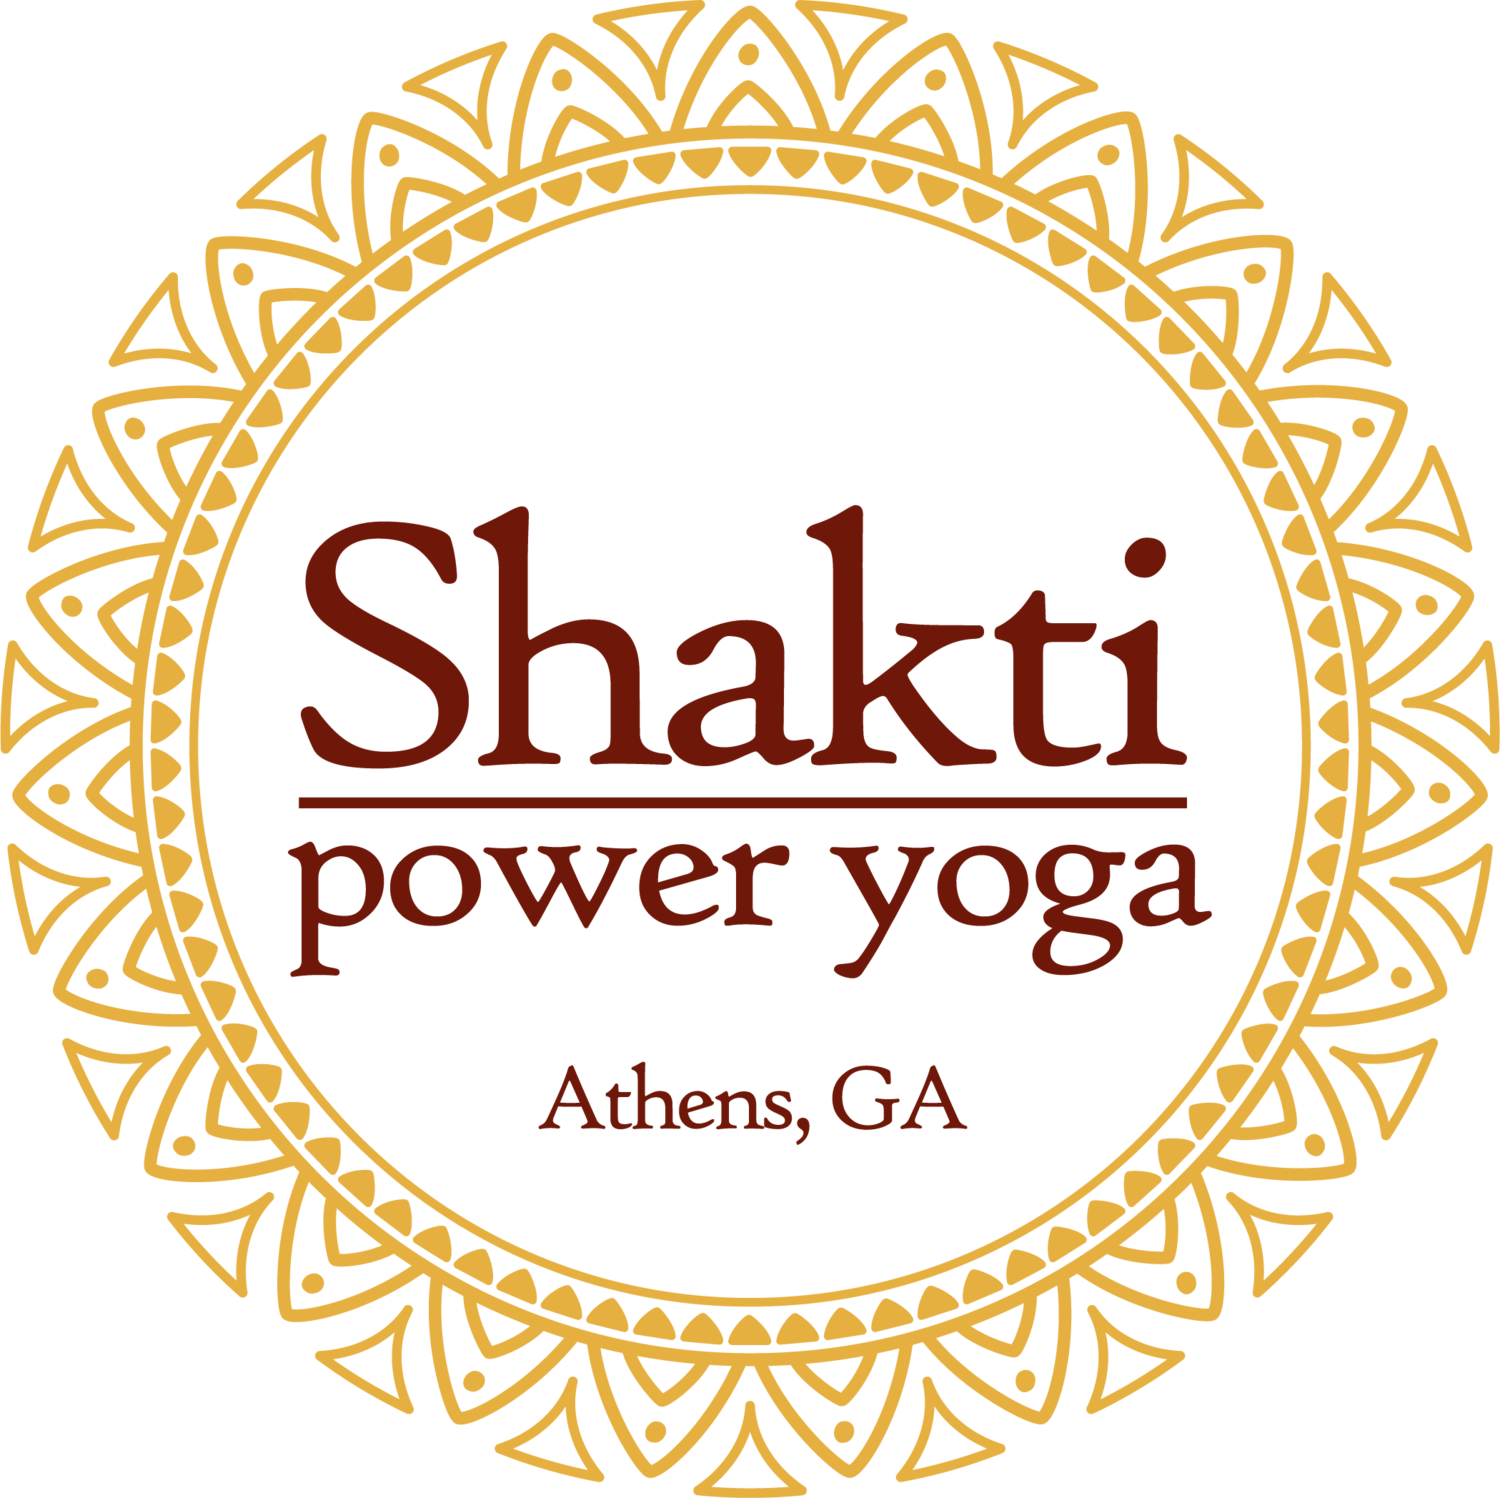 Shakti Yoga Athens